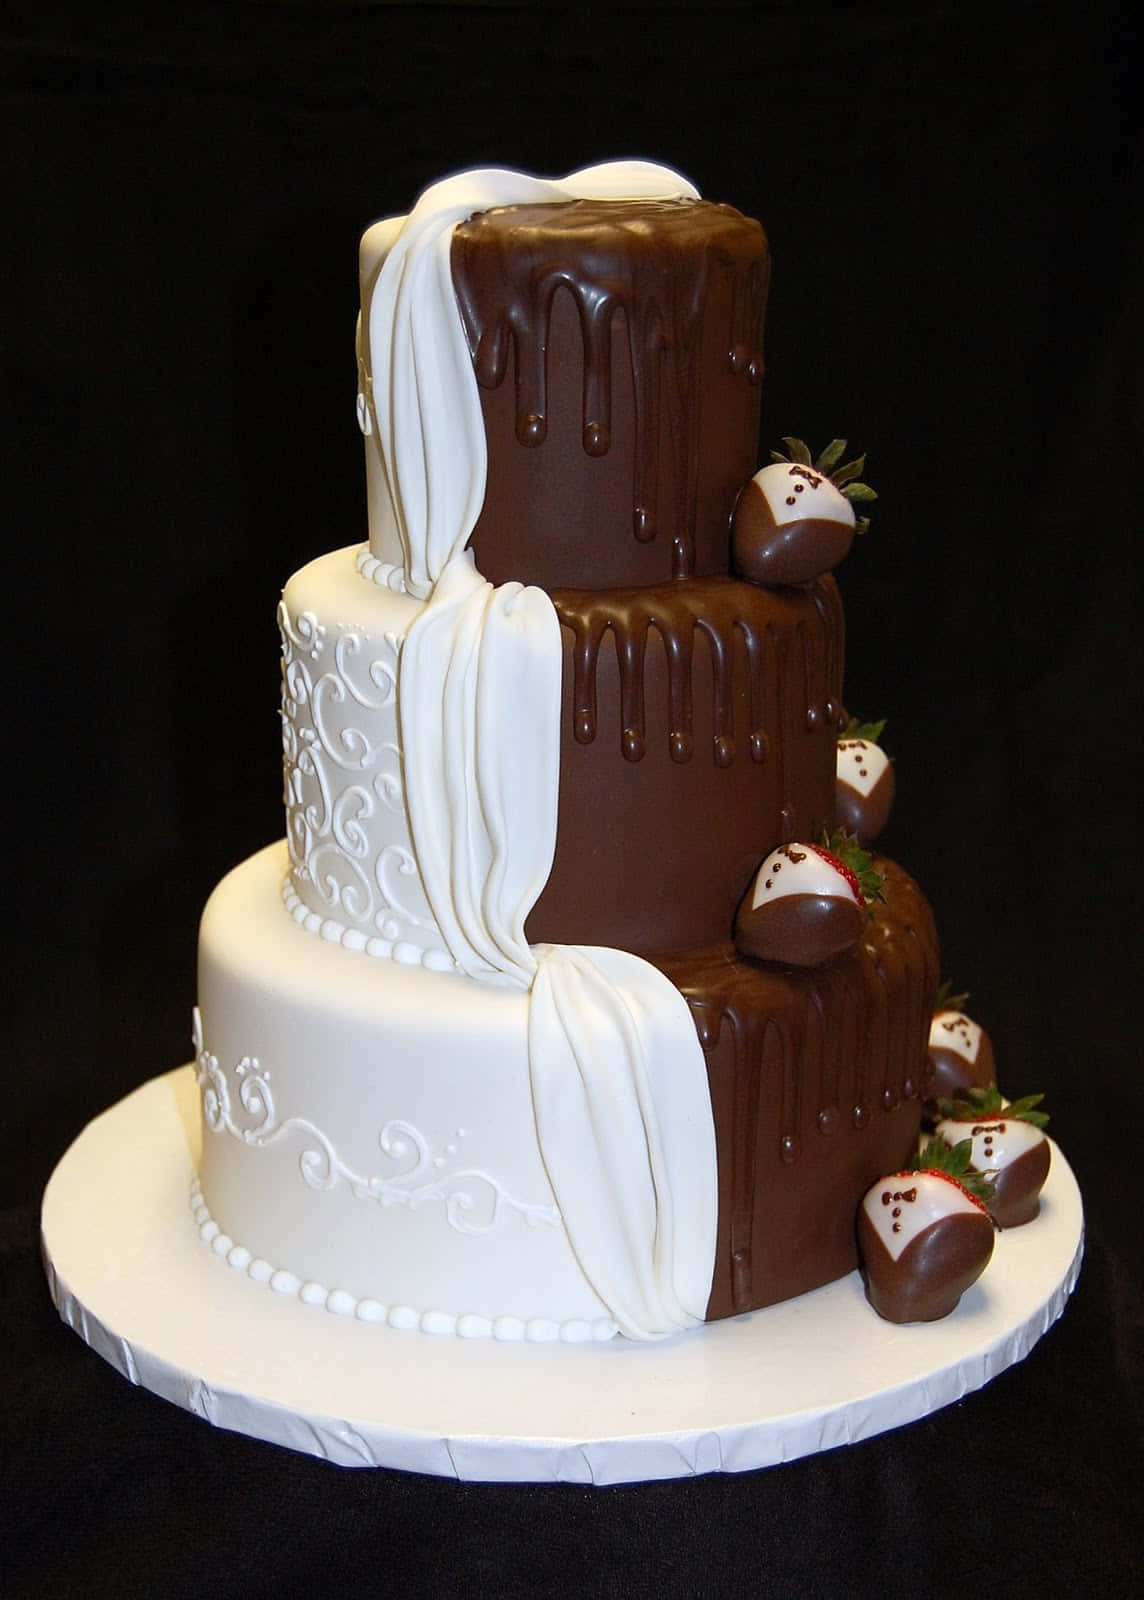 A White And Chocolate Wedding Cake